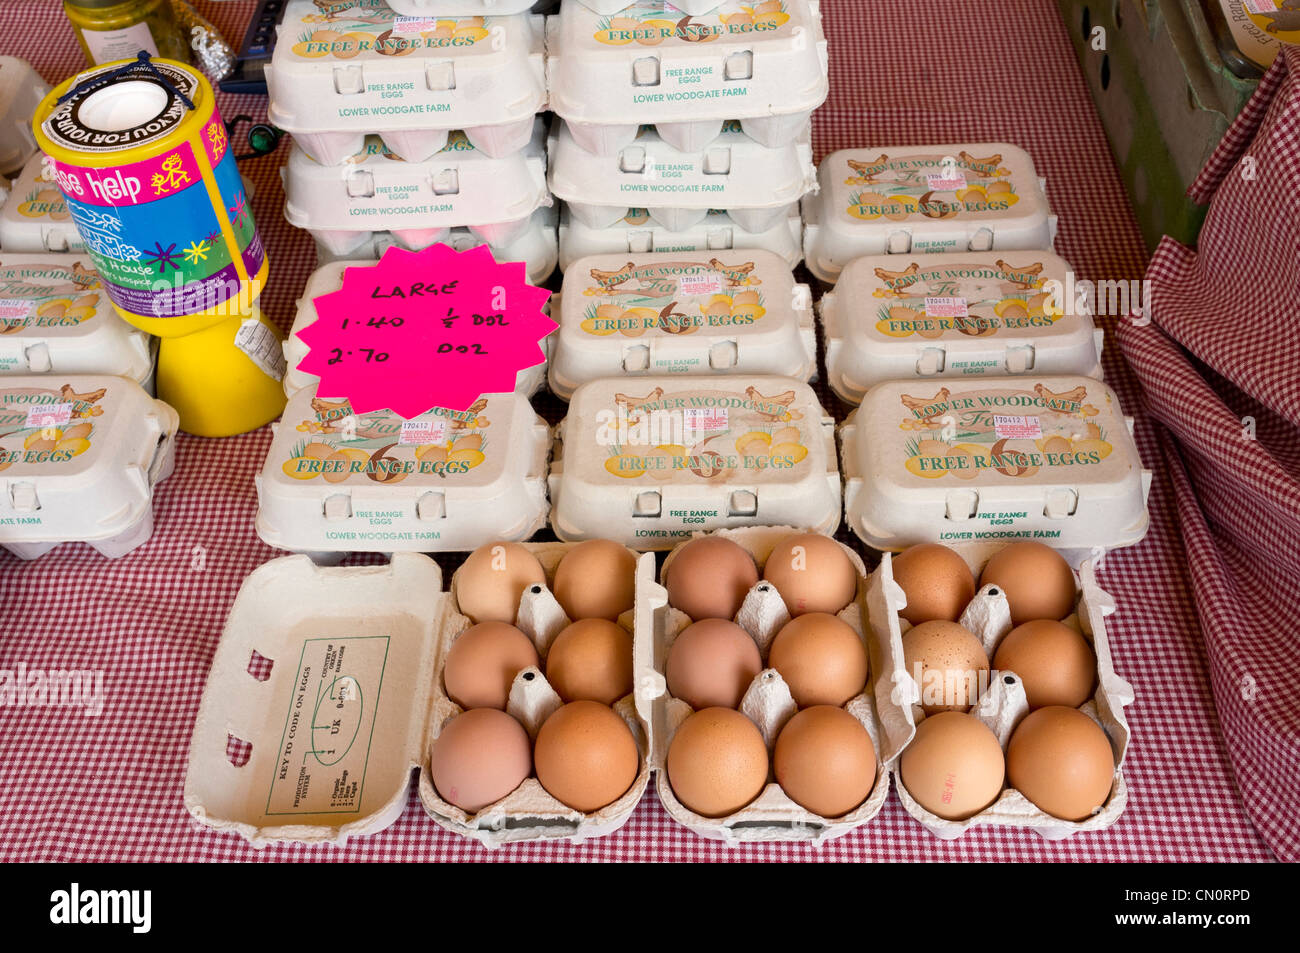 Fresh free range uova sul mercato in stallo Foto Stock